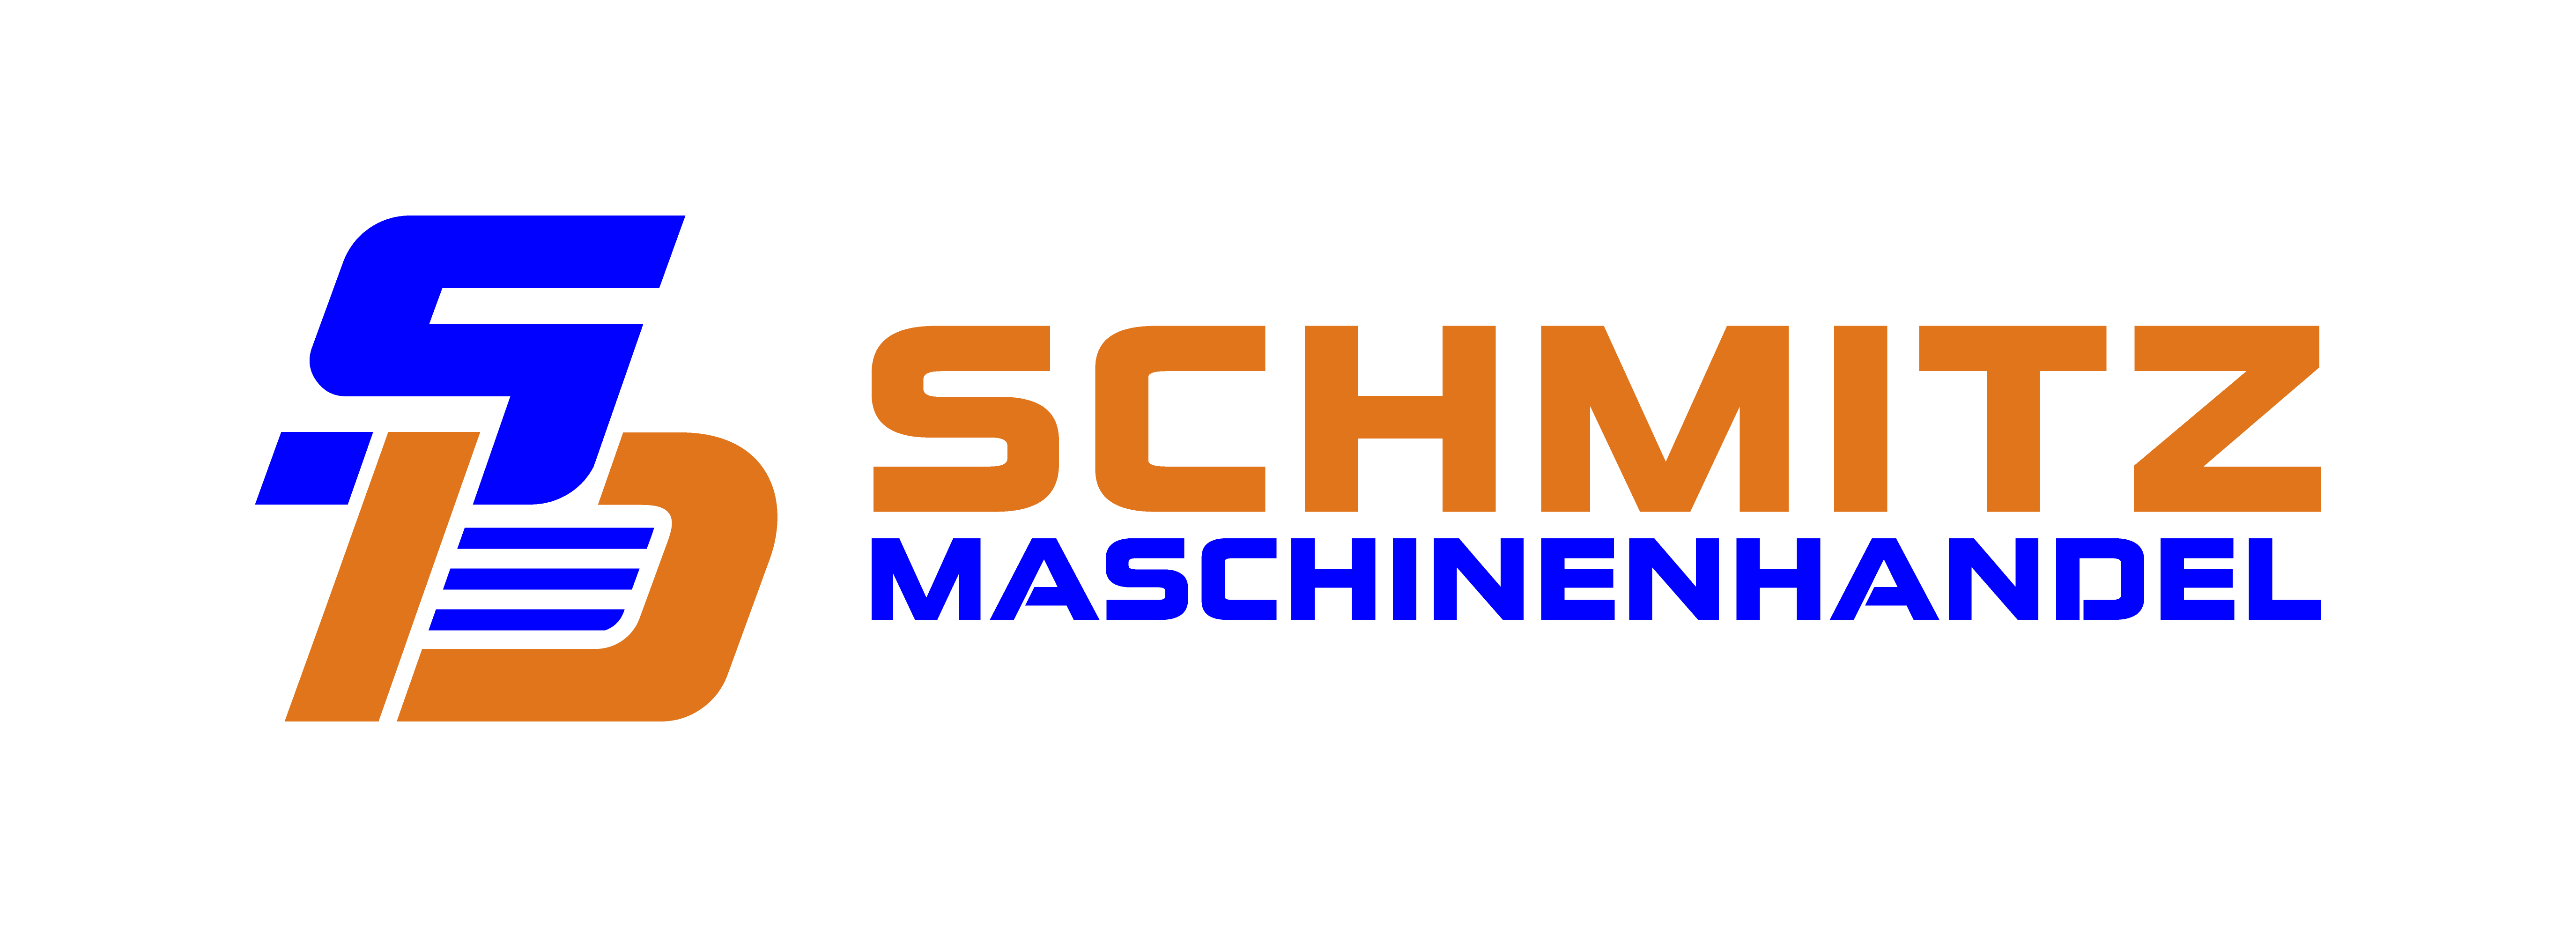 Schmitz Maschinenhandel